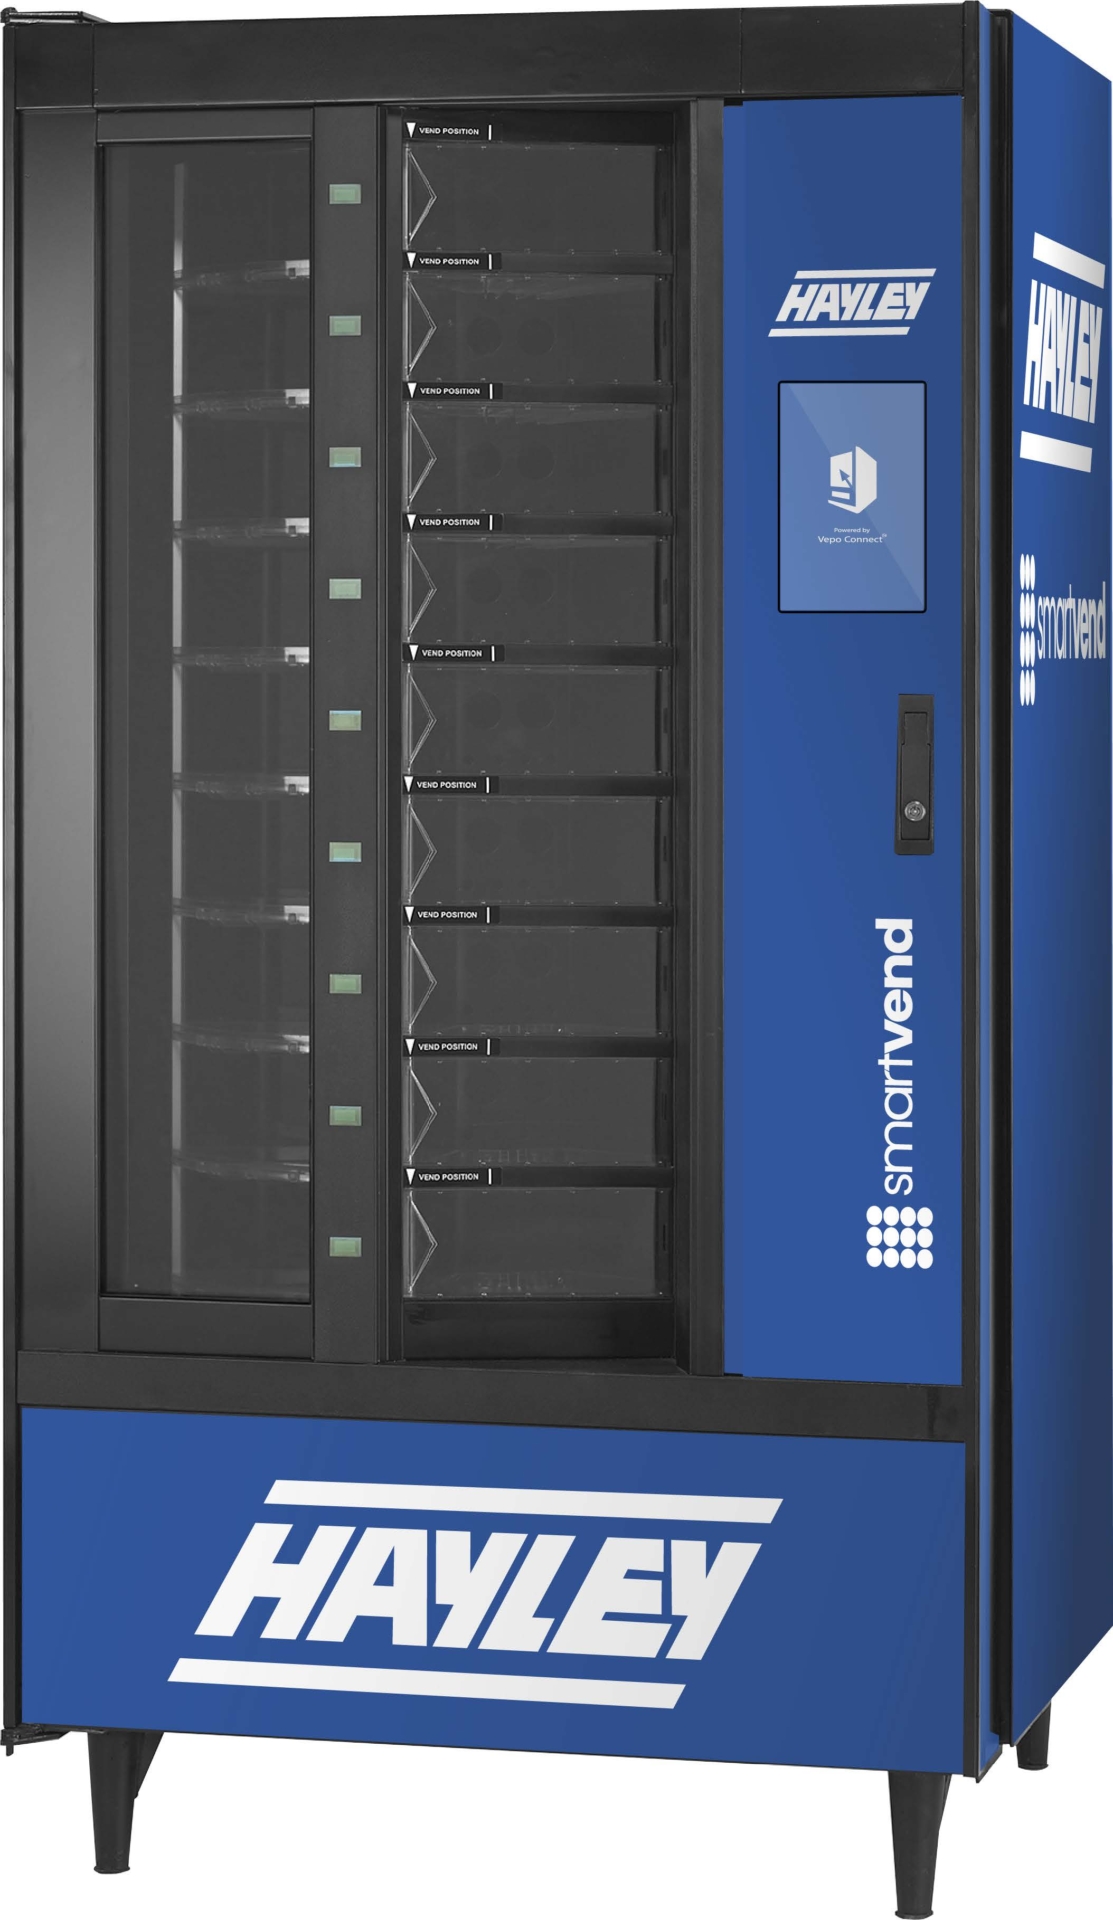 SmartVend SV350 industrial vending machine